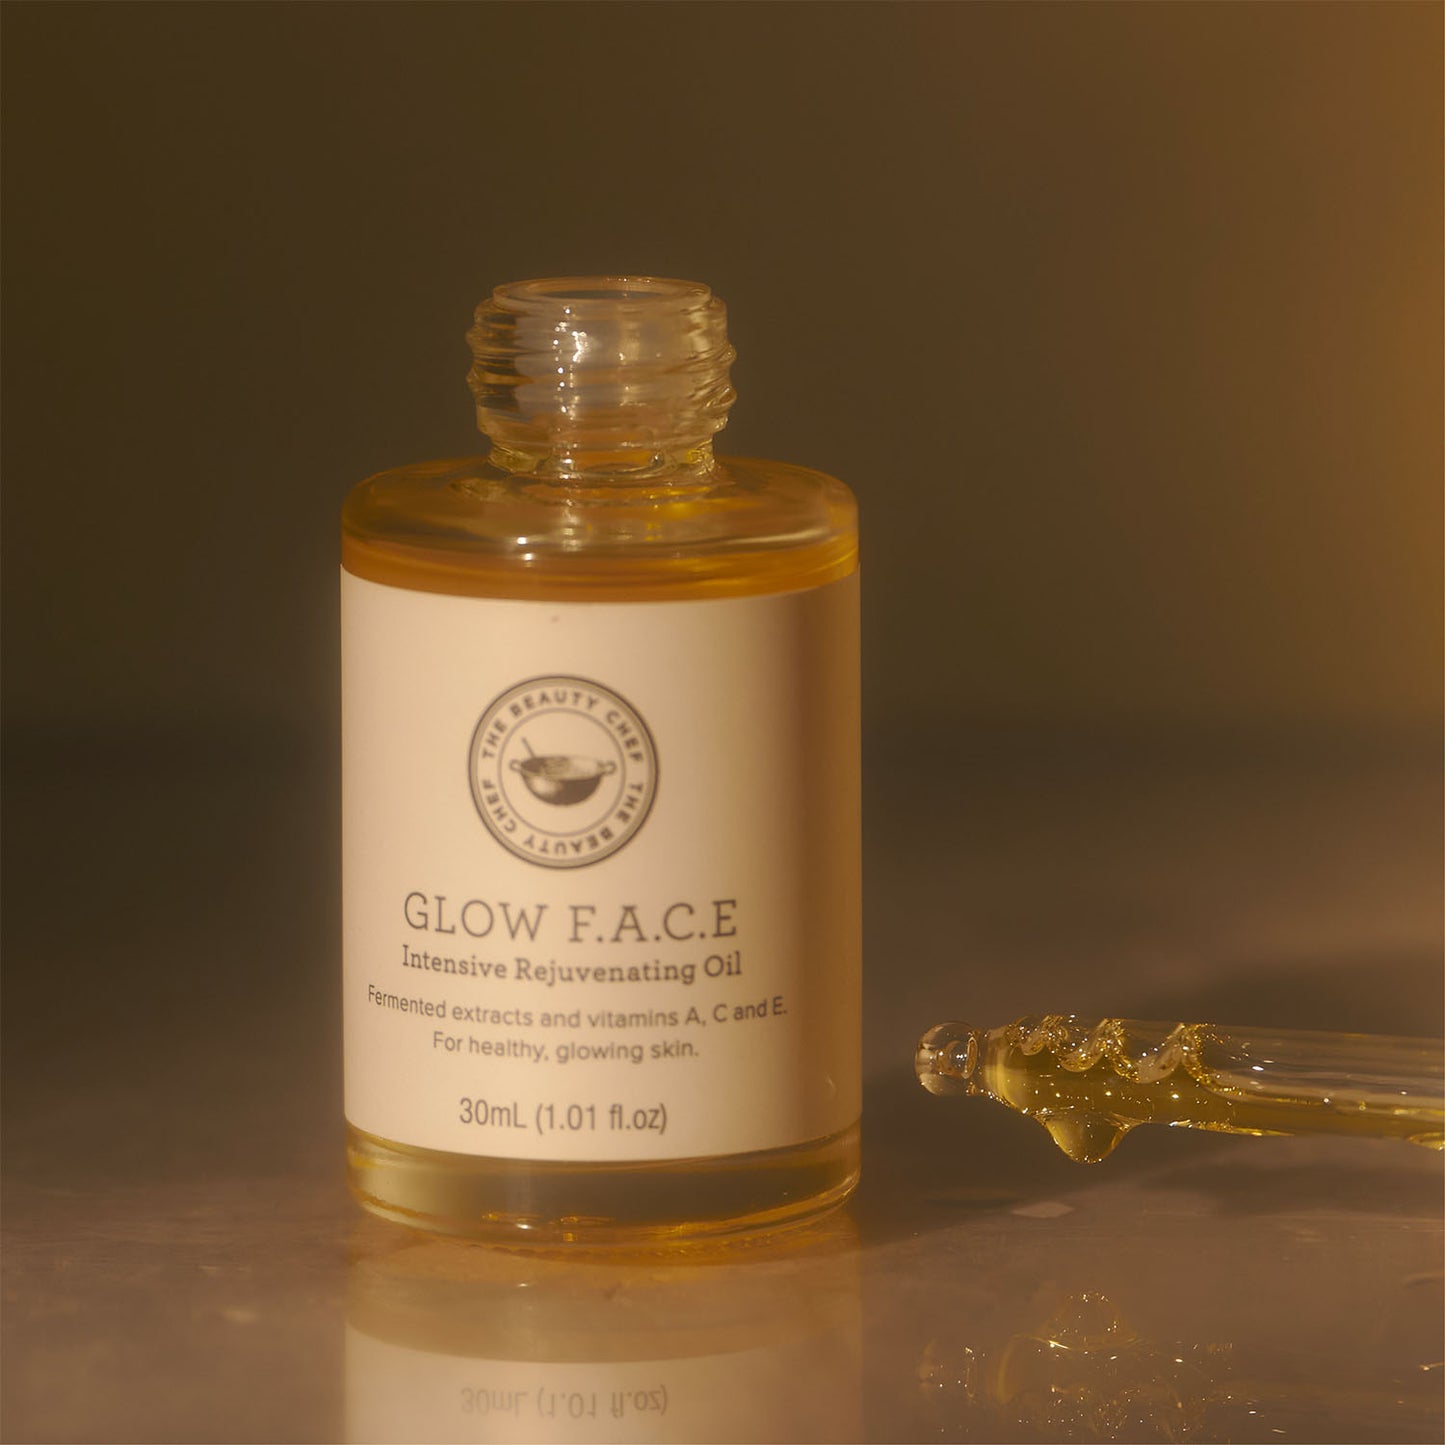 Glow Face Intensive Rejuvenating Oil